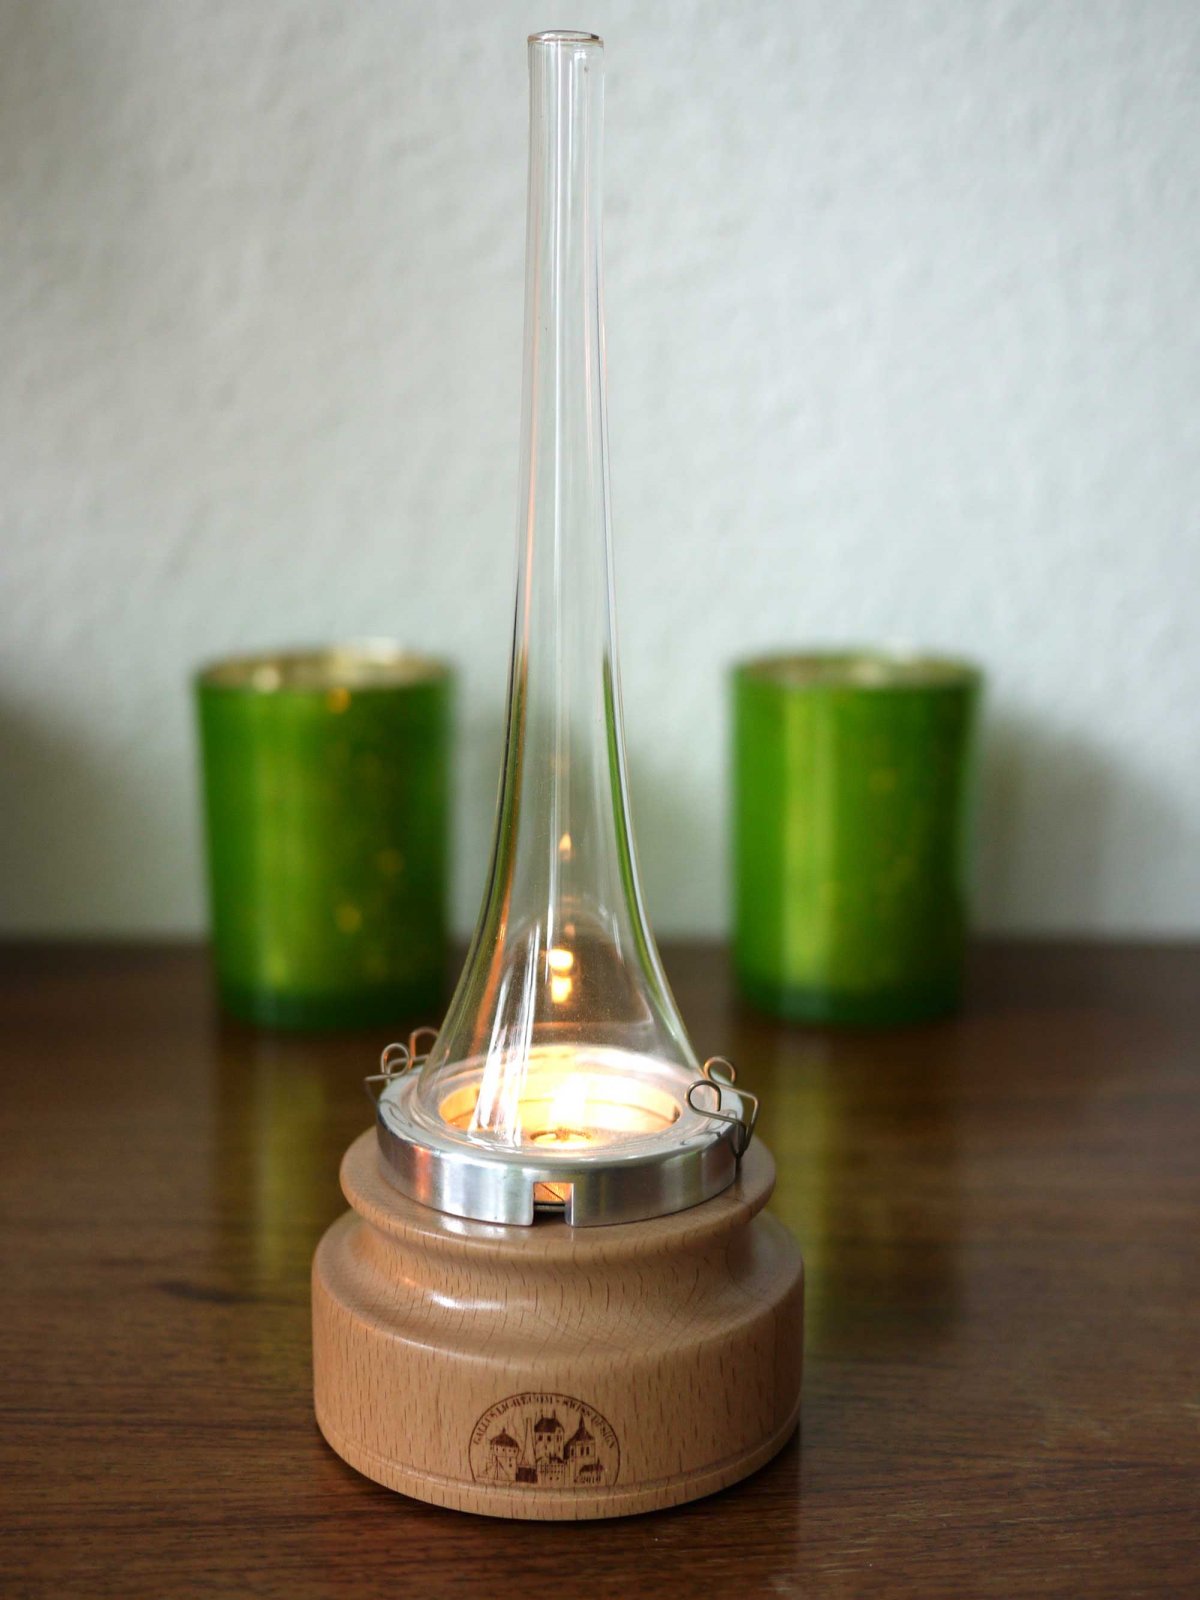 Gallus Lamp Nautical Oil Lamp Made in Switzerland